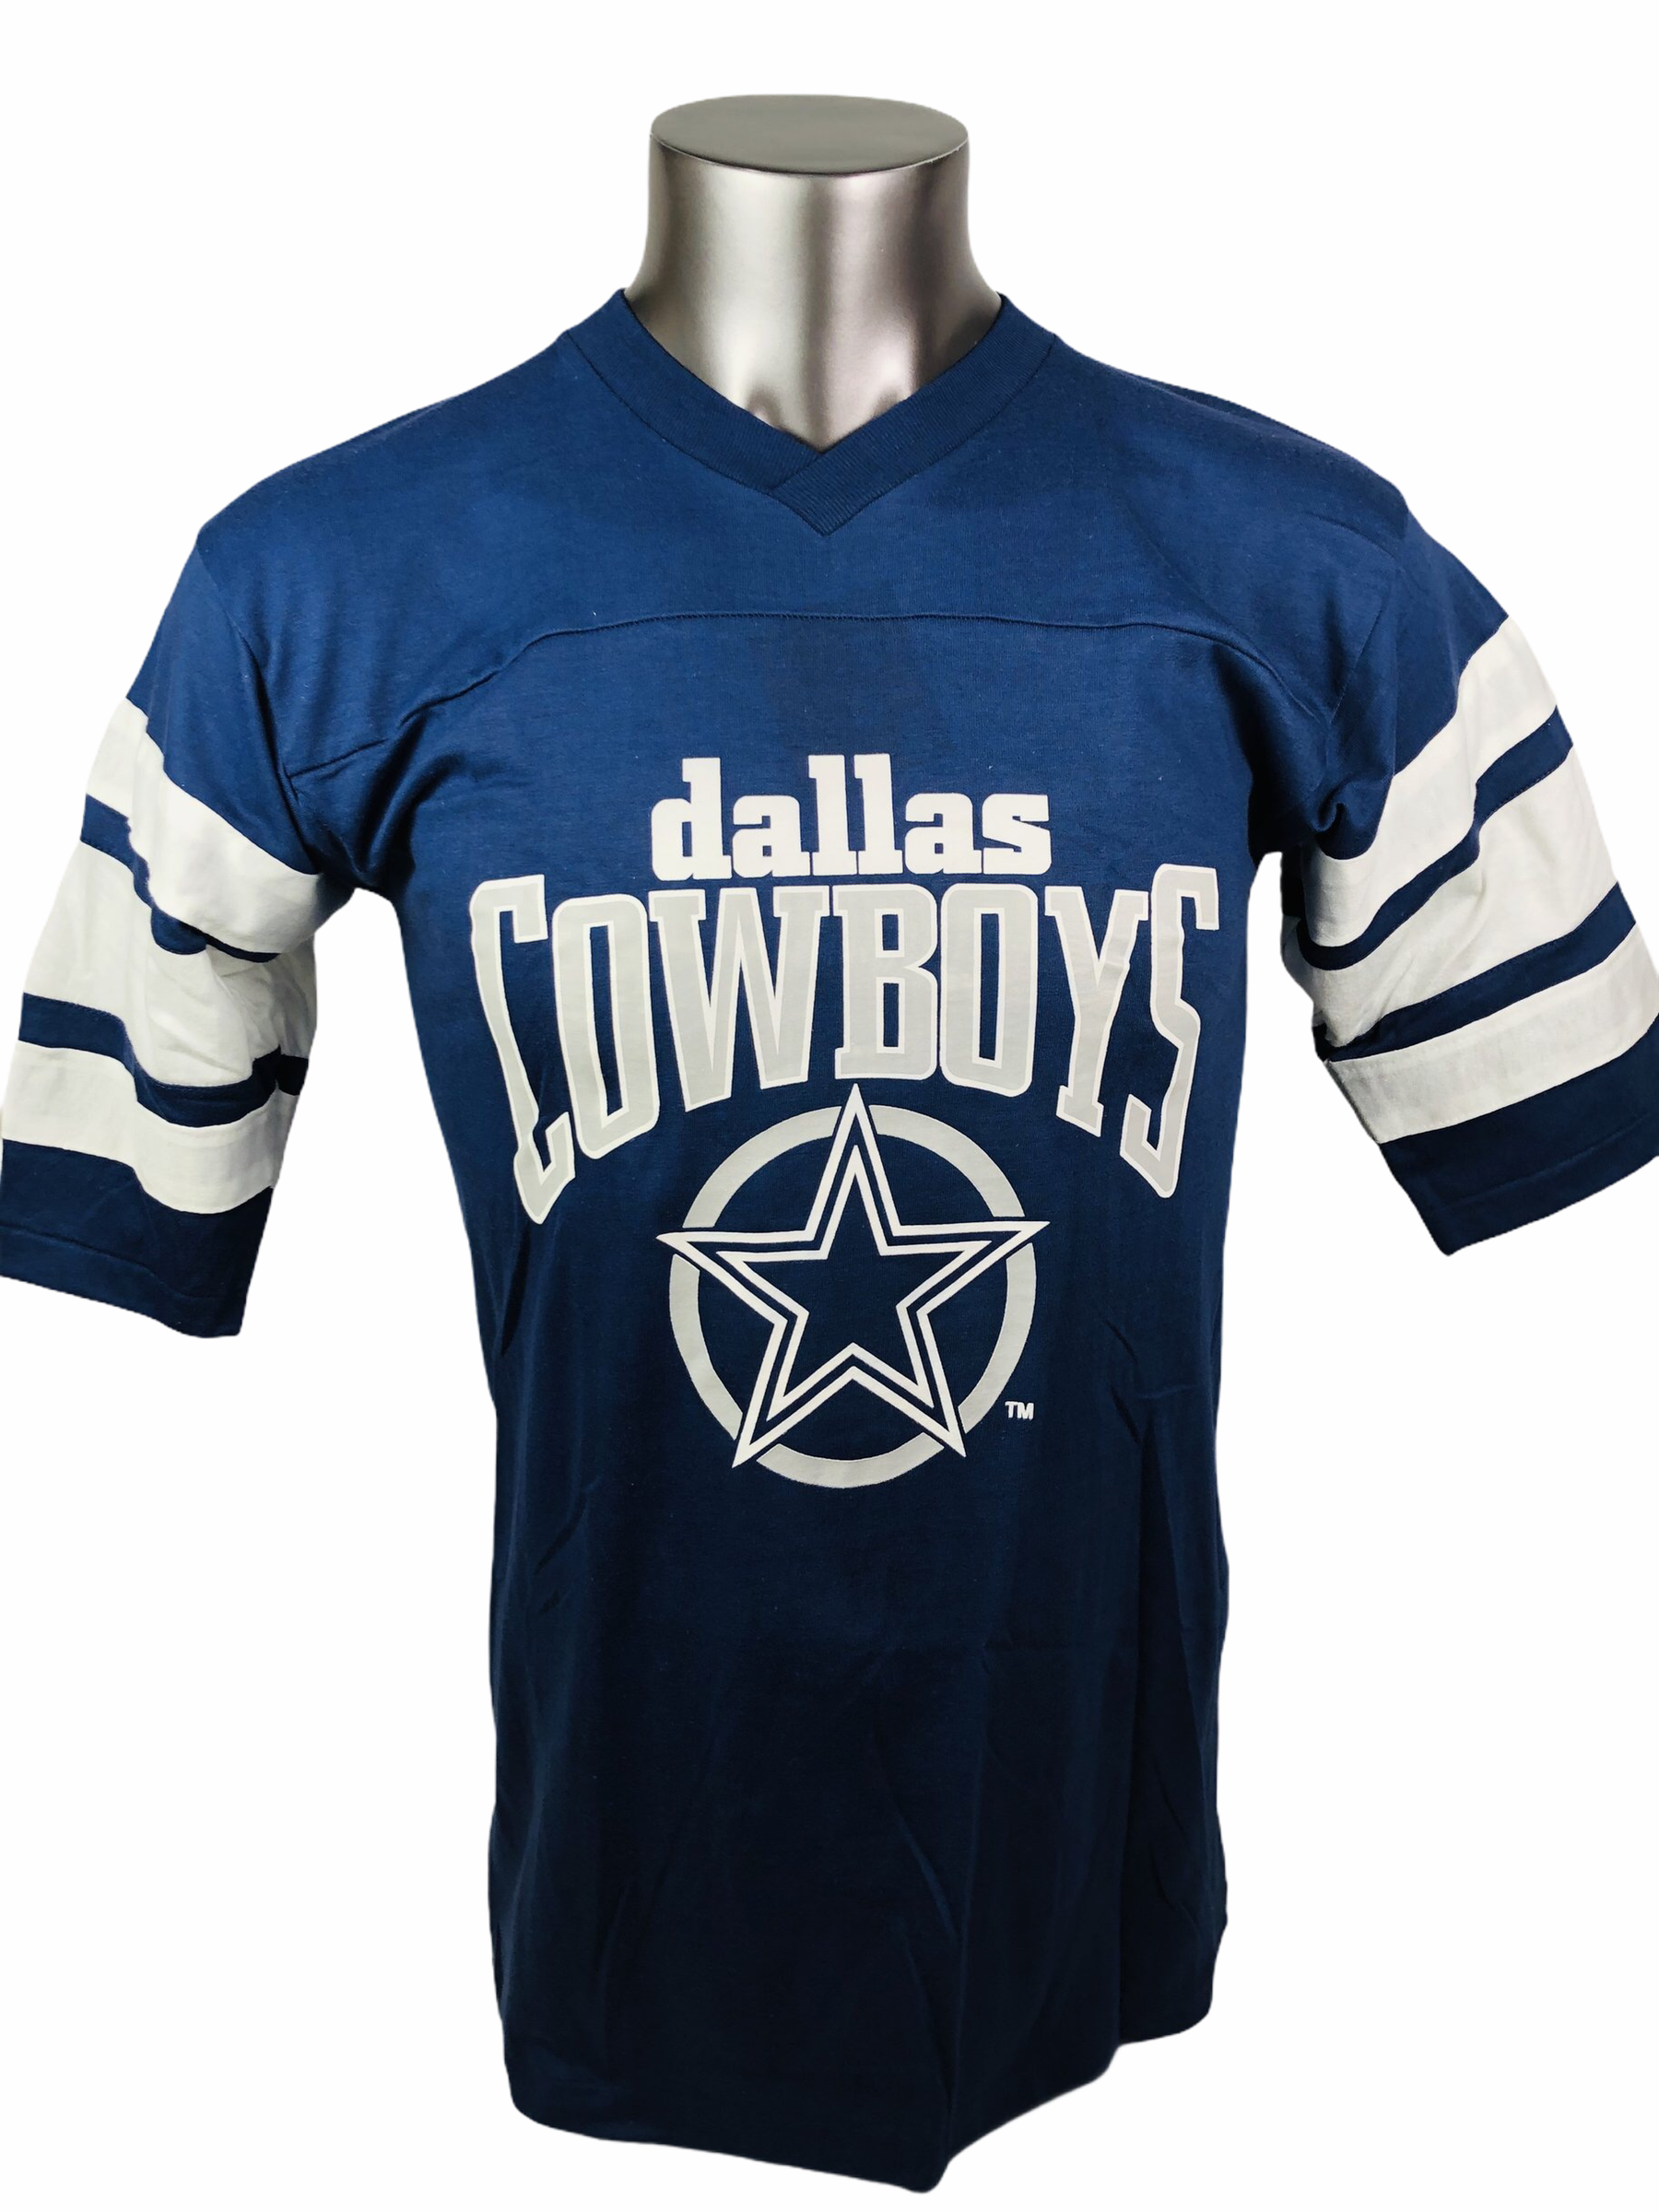 dallas cowboys t shirt vintage